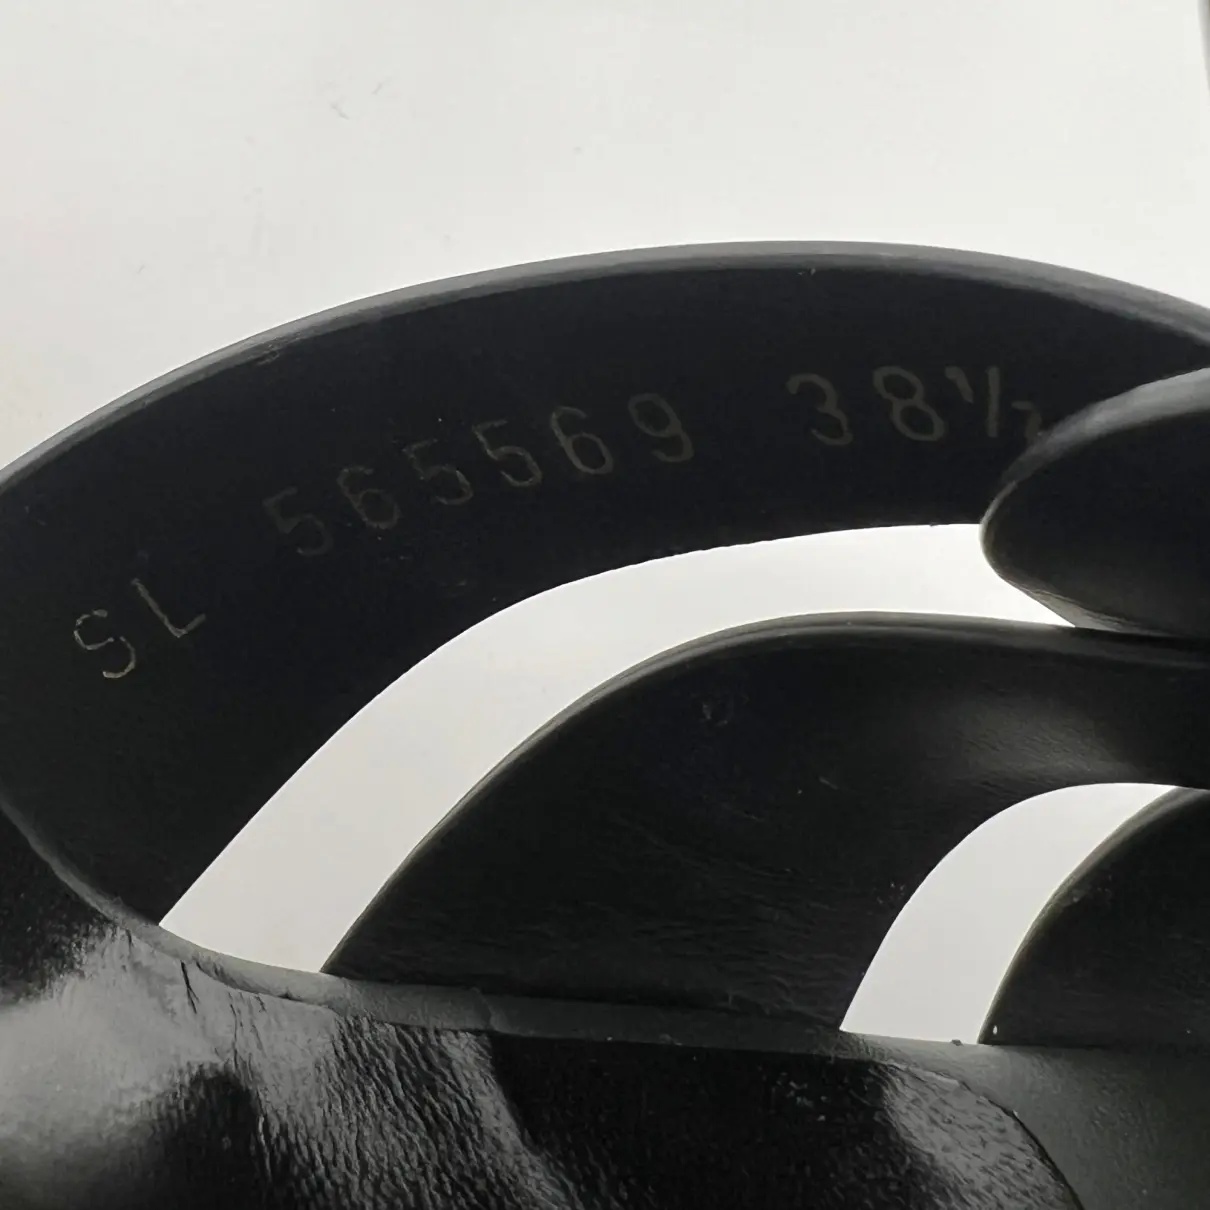 Tribute leather sandal Saint Laurent